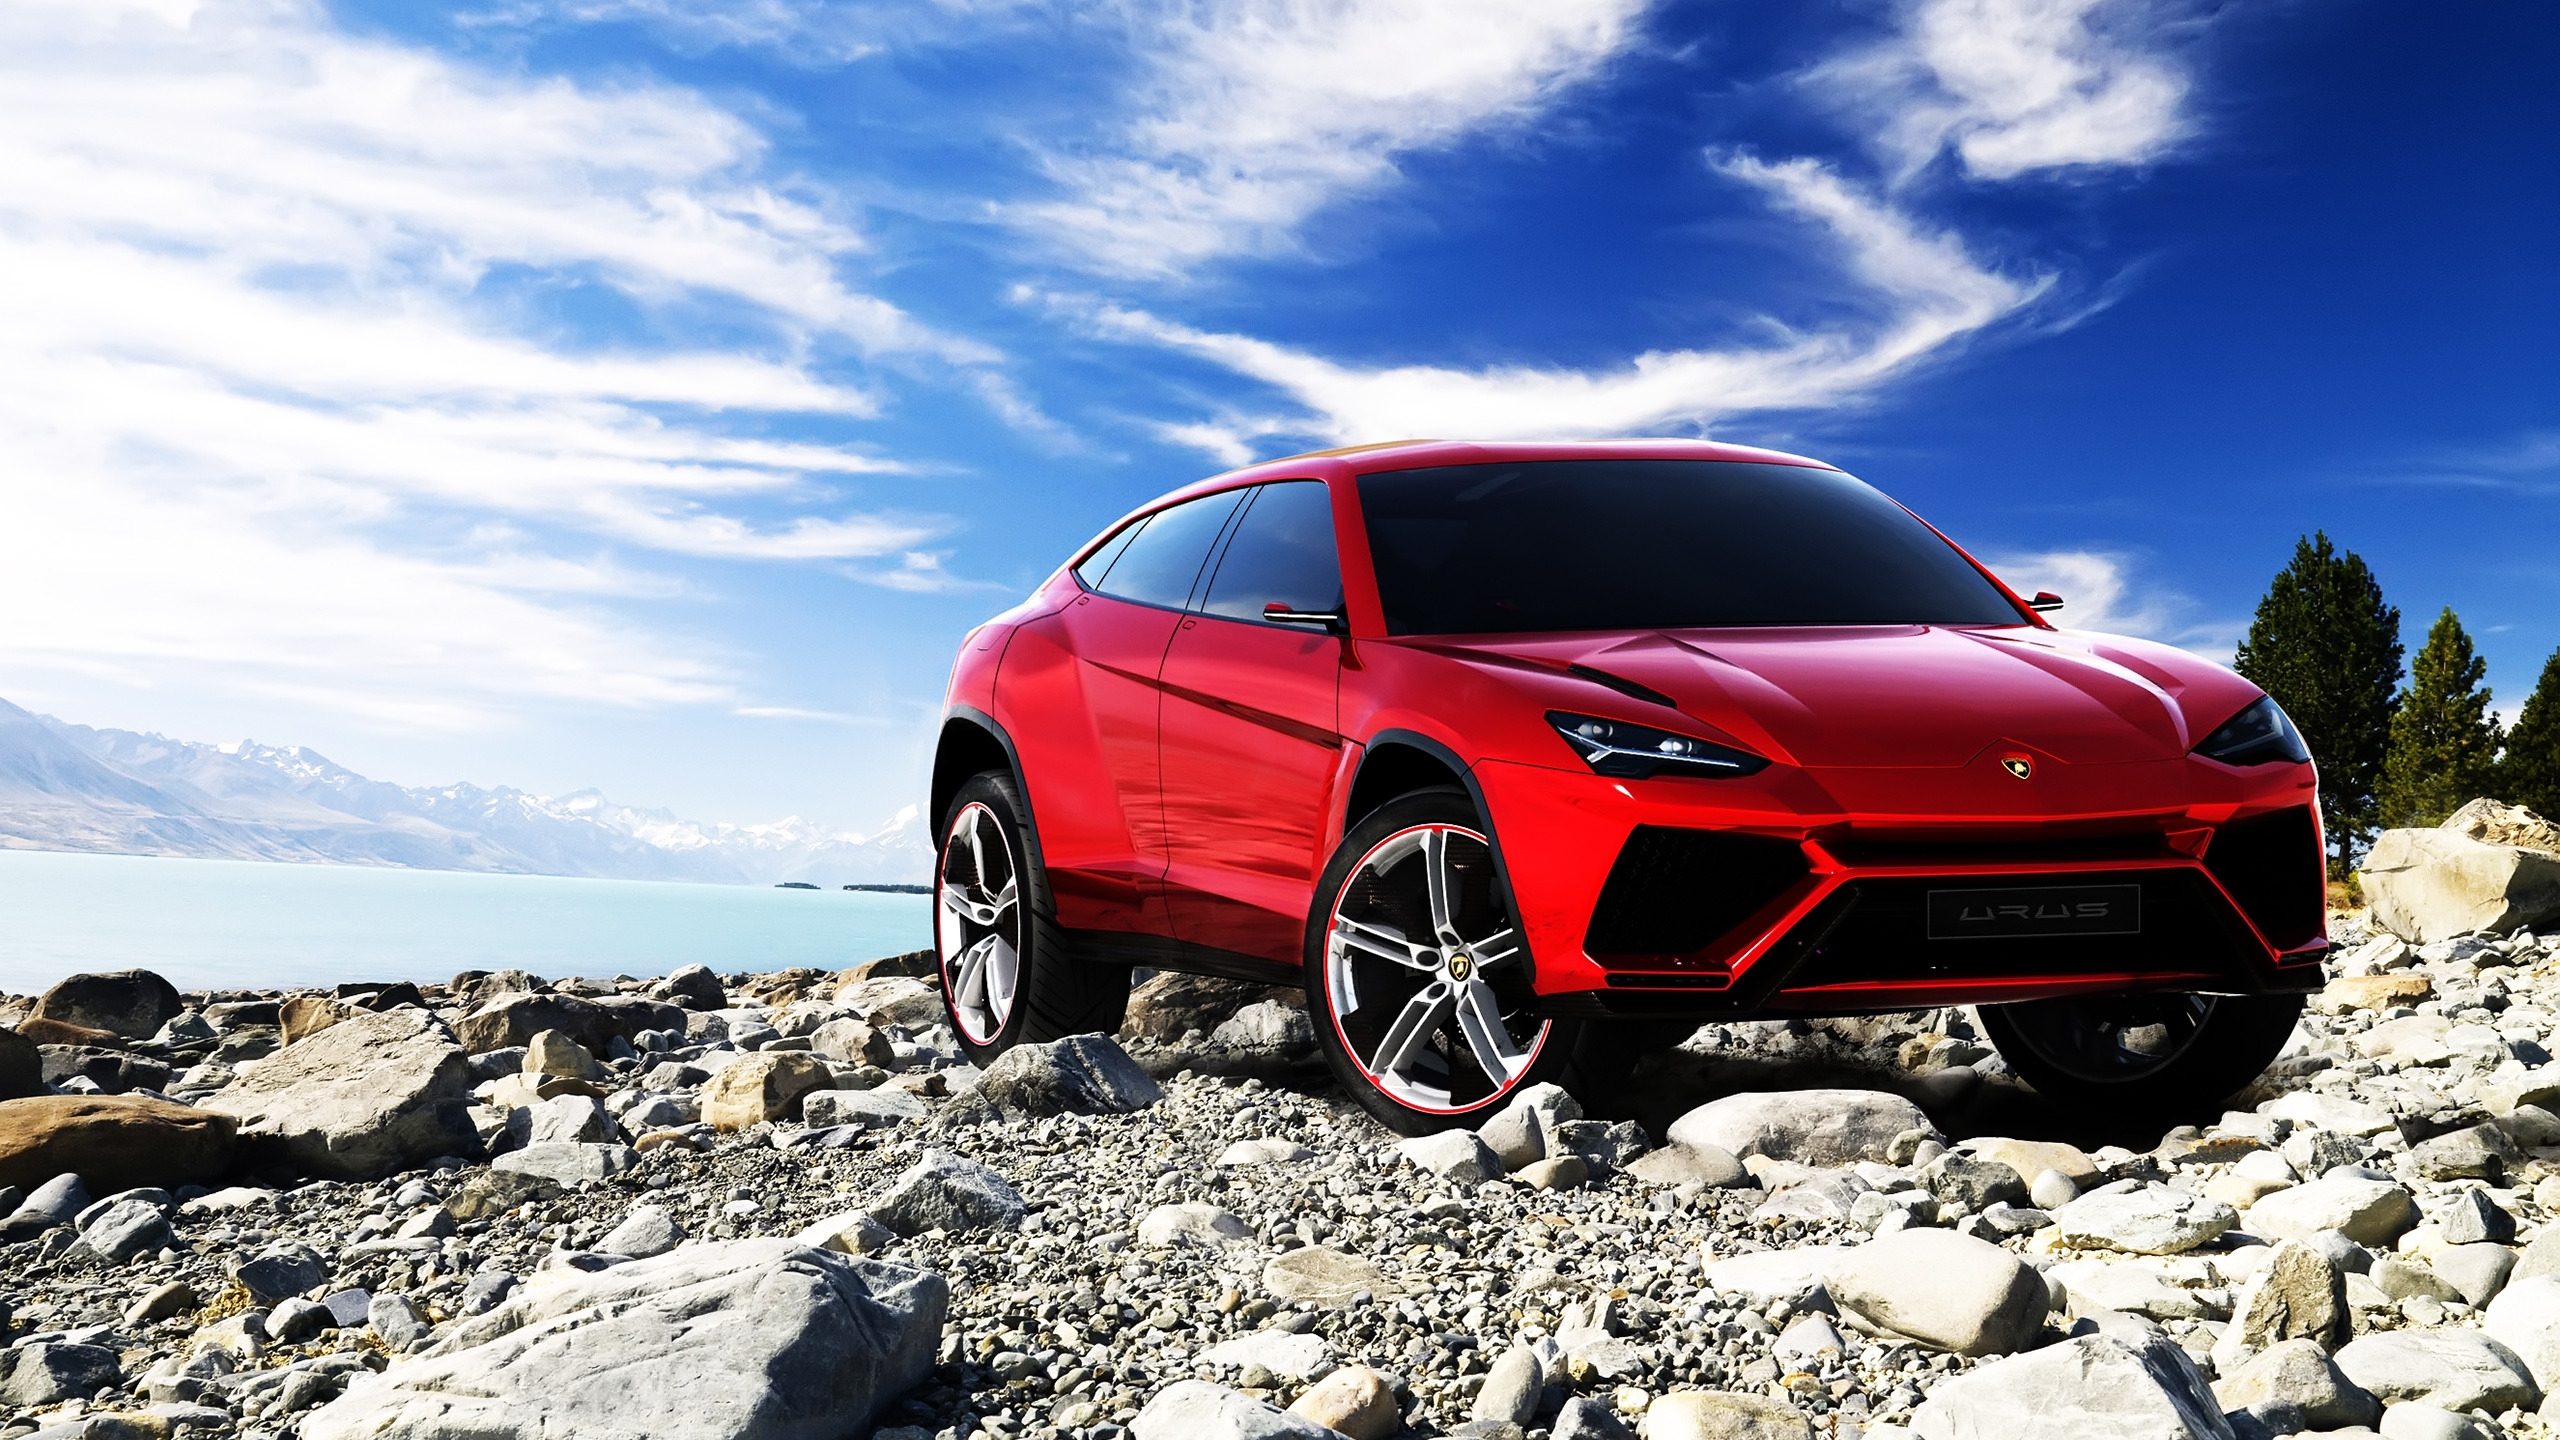 Lamborghini Urus Concept for 2560x1440 HDTV resolution